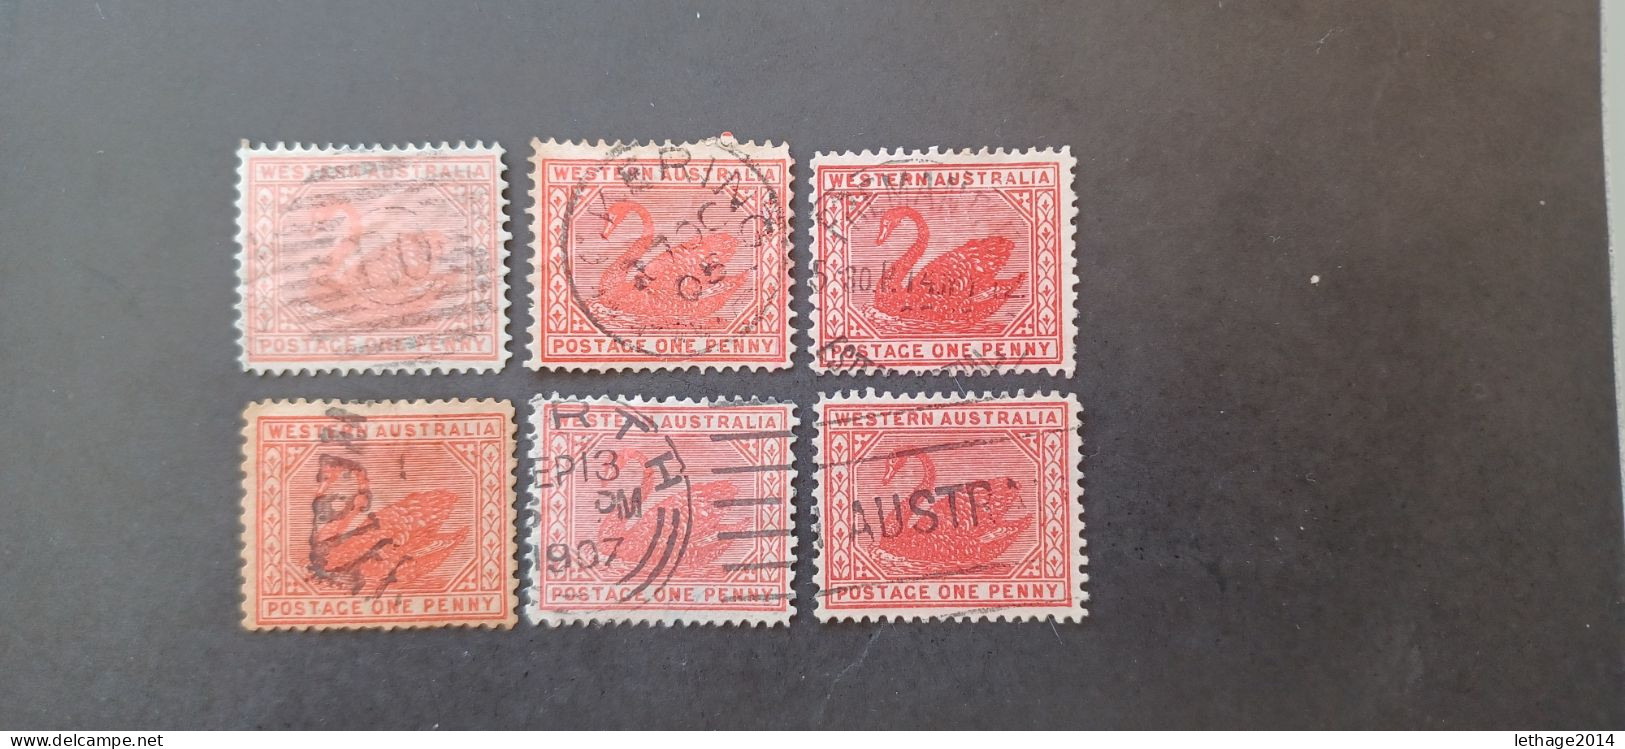 WESTERN AUSTRALIA 1885 SWAN CAT GIBBONS N 99 - Used Stamps